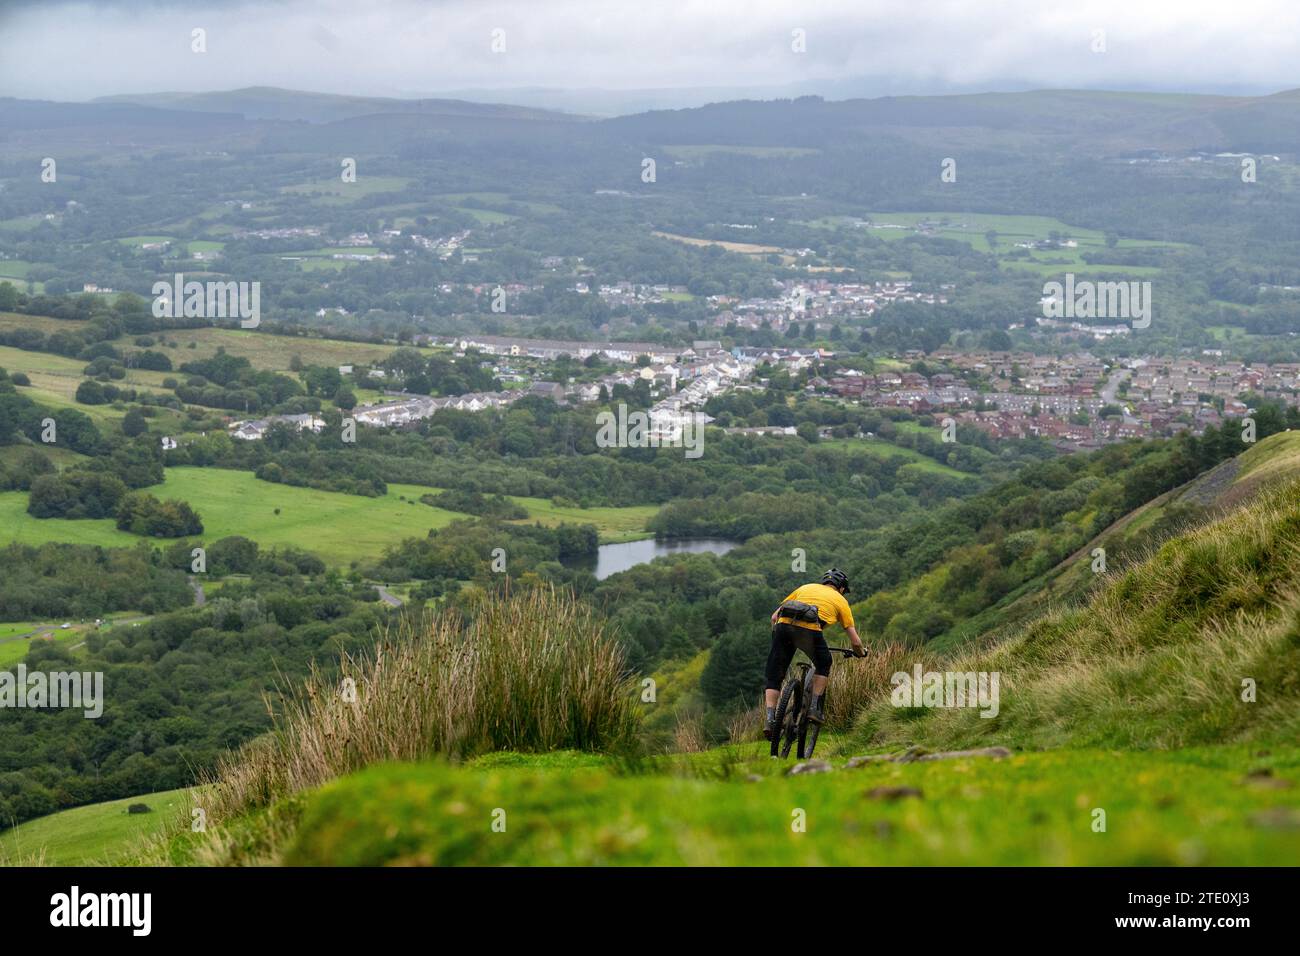 A man rides a mountain bike in Rhondda Cynon Taf in South Wales. Stock Photo